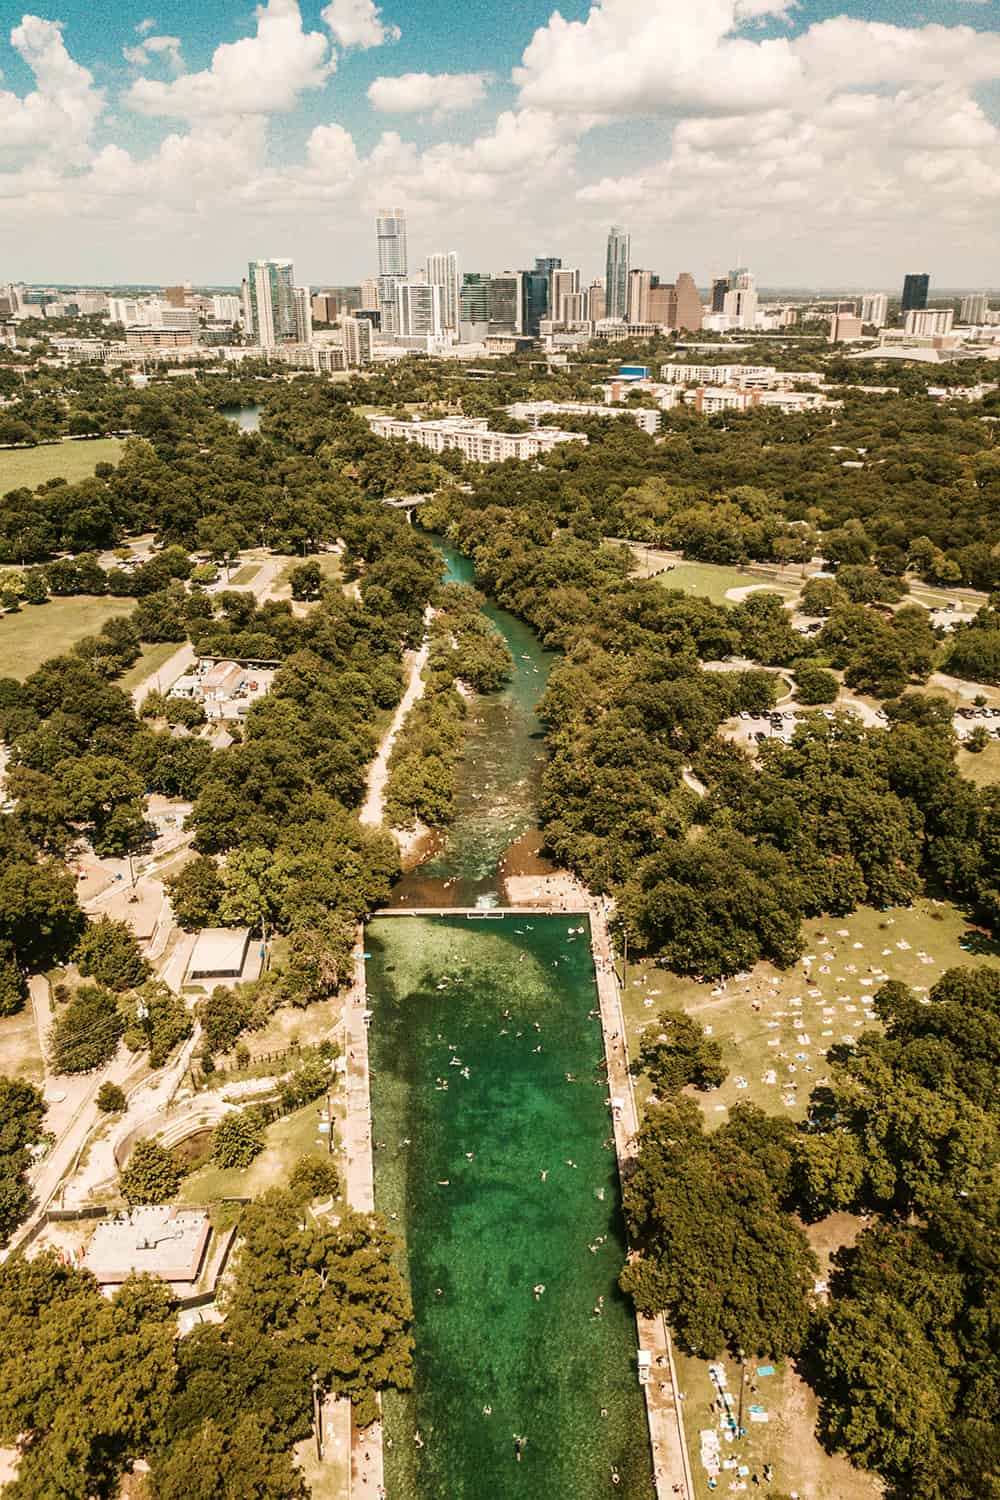 Barton Springs Pool in Austin Texas